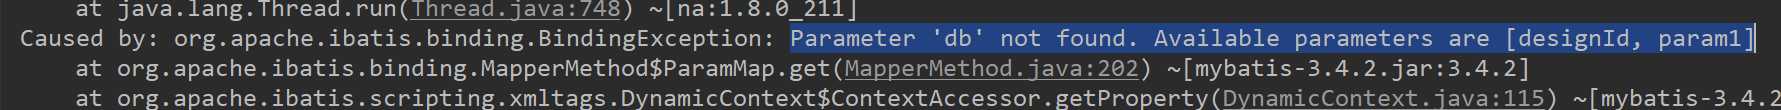 Mybatis的映射文件Mapper.xml获取applicaition.properties配置文件中定义的属性值